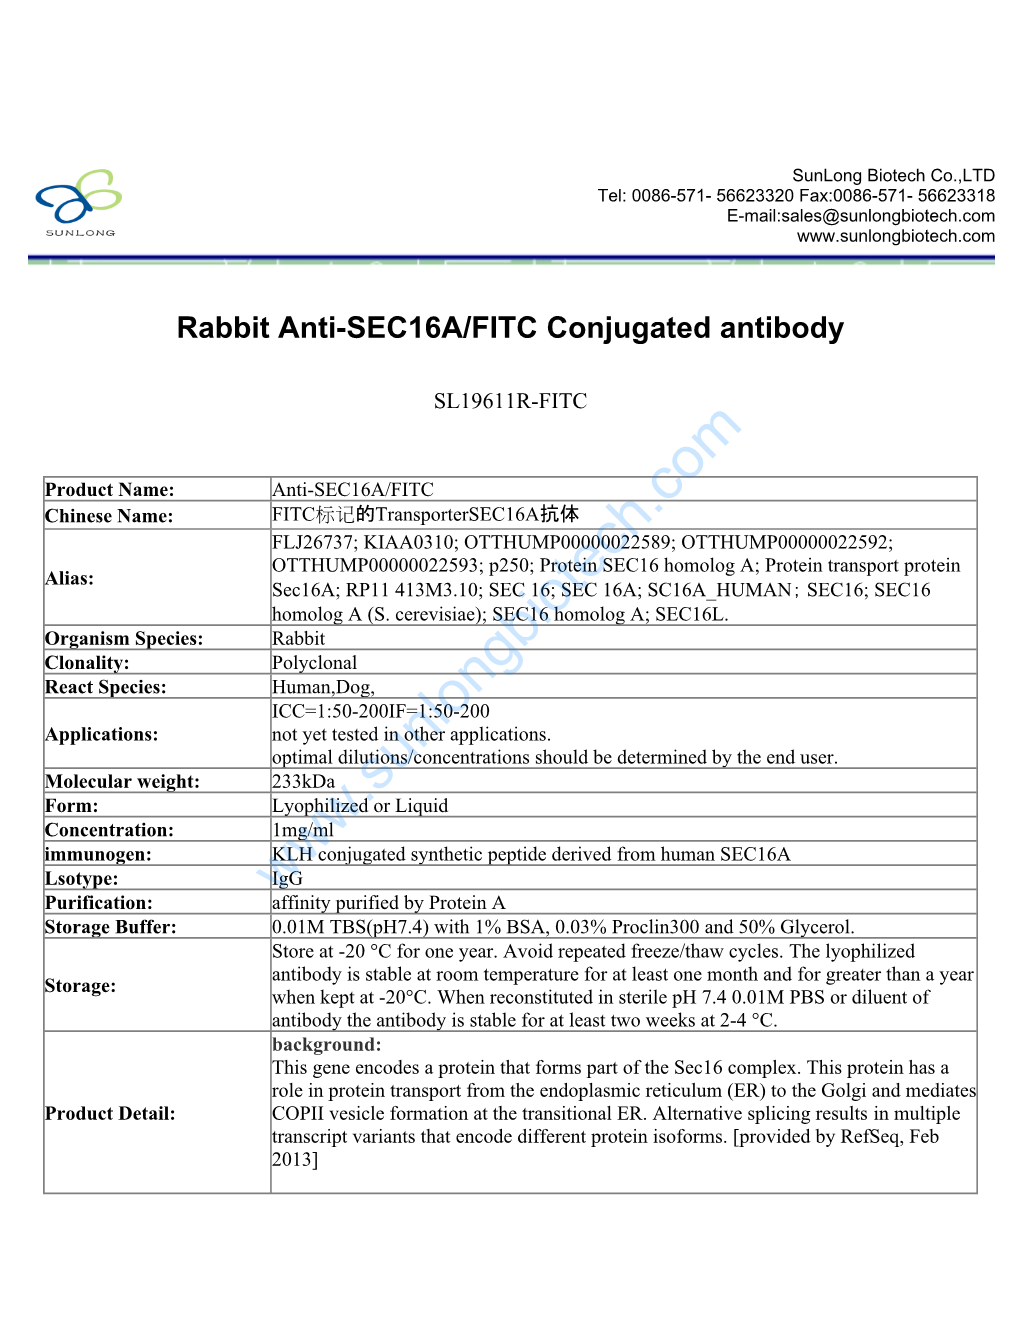 Rabbit Anti-SEC16A/FITC Conjugated Antibody